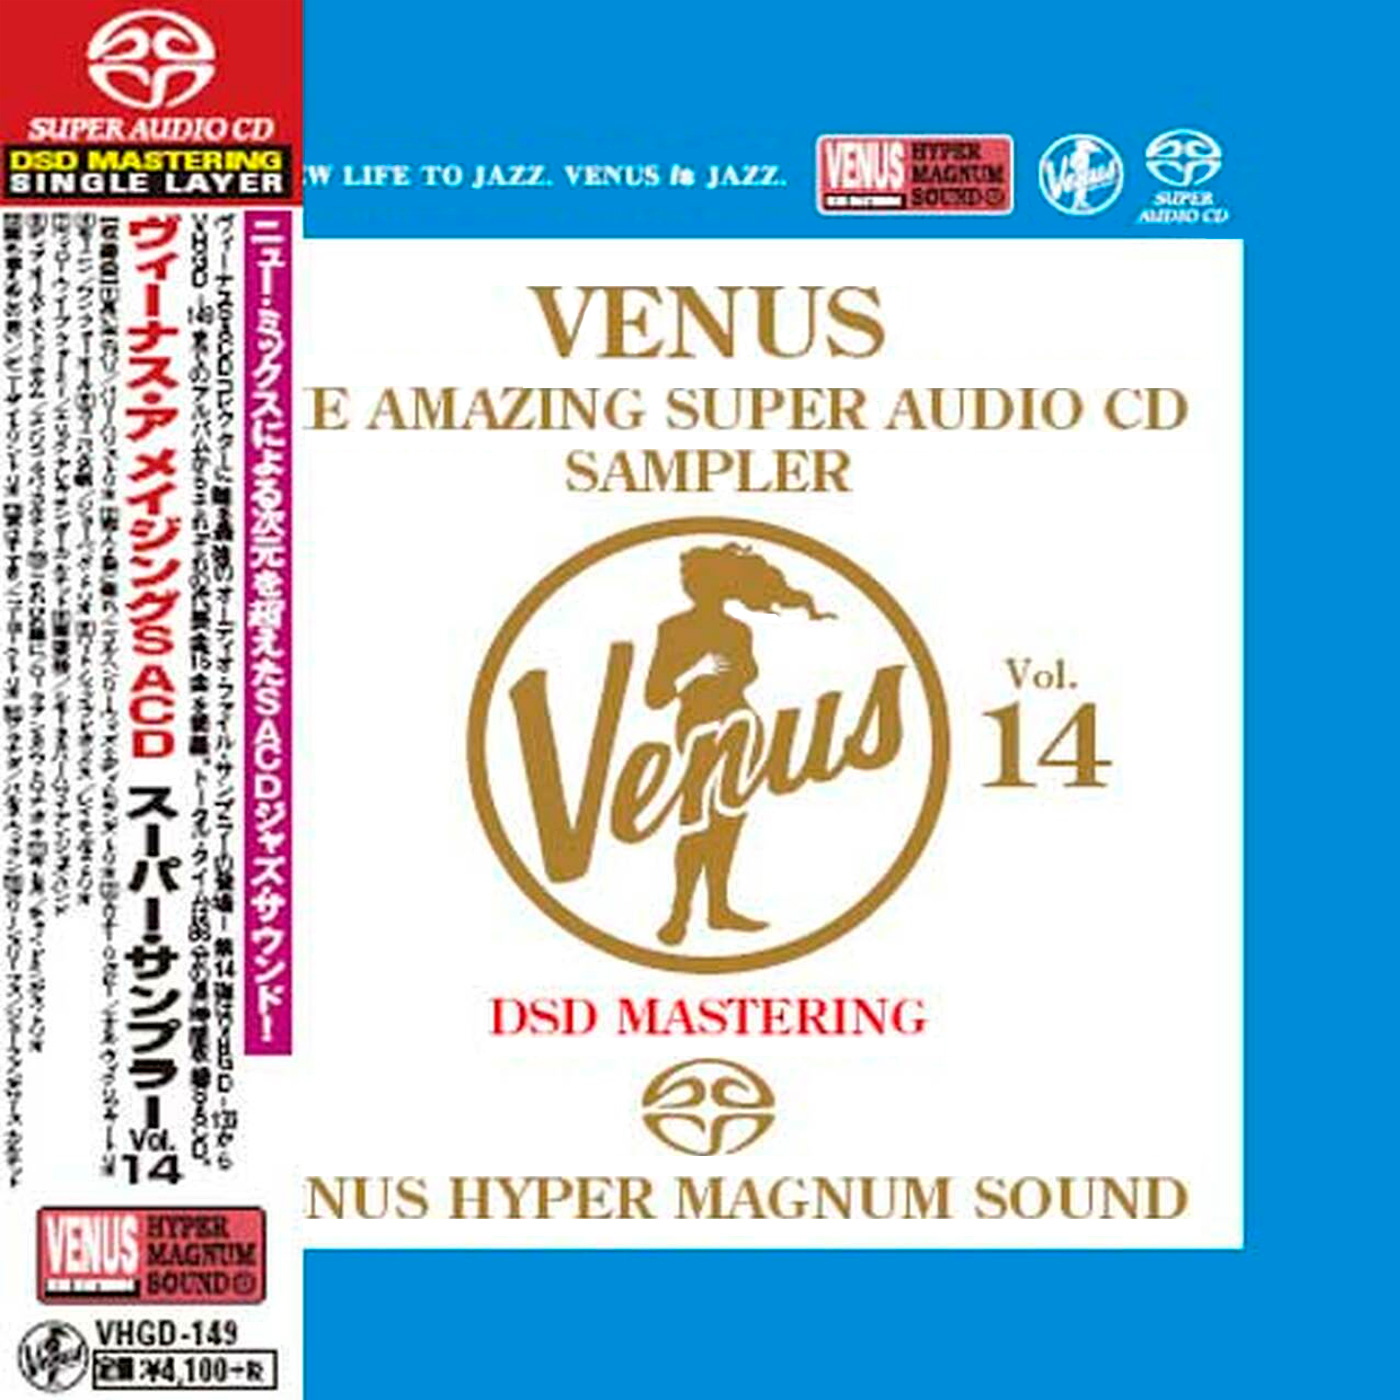 Various Artists – Venus: The Amazing Super Audio CD Sampler Vol.14 (2016) [Japan] SACD ISO + DSF DSD64 + Hi-Res FLAC